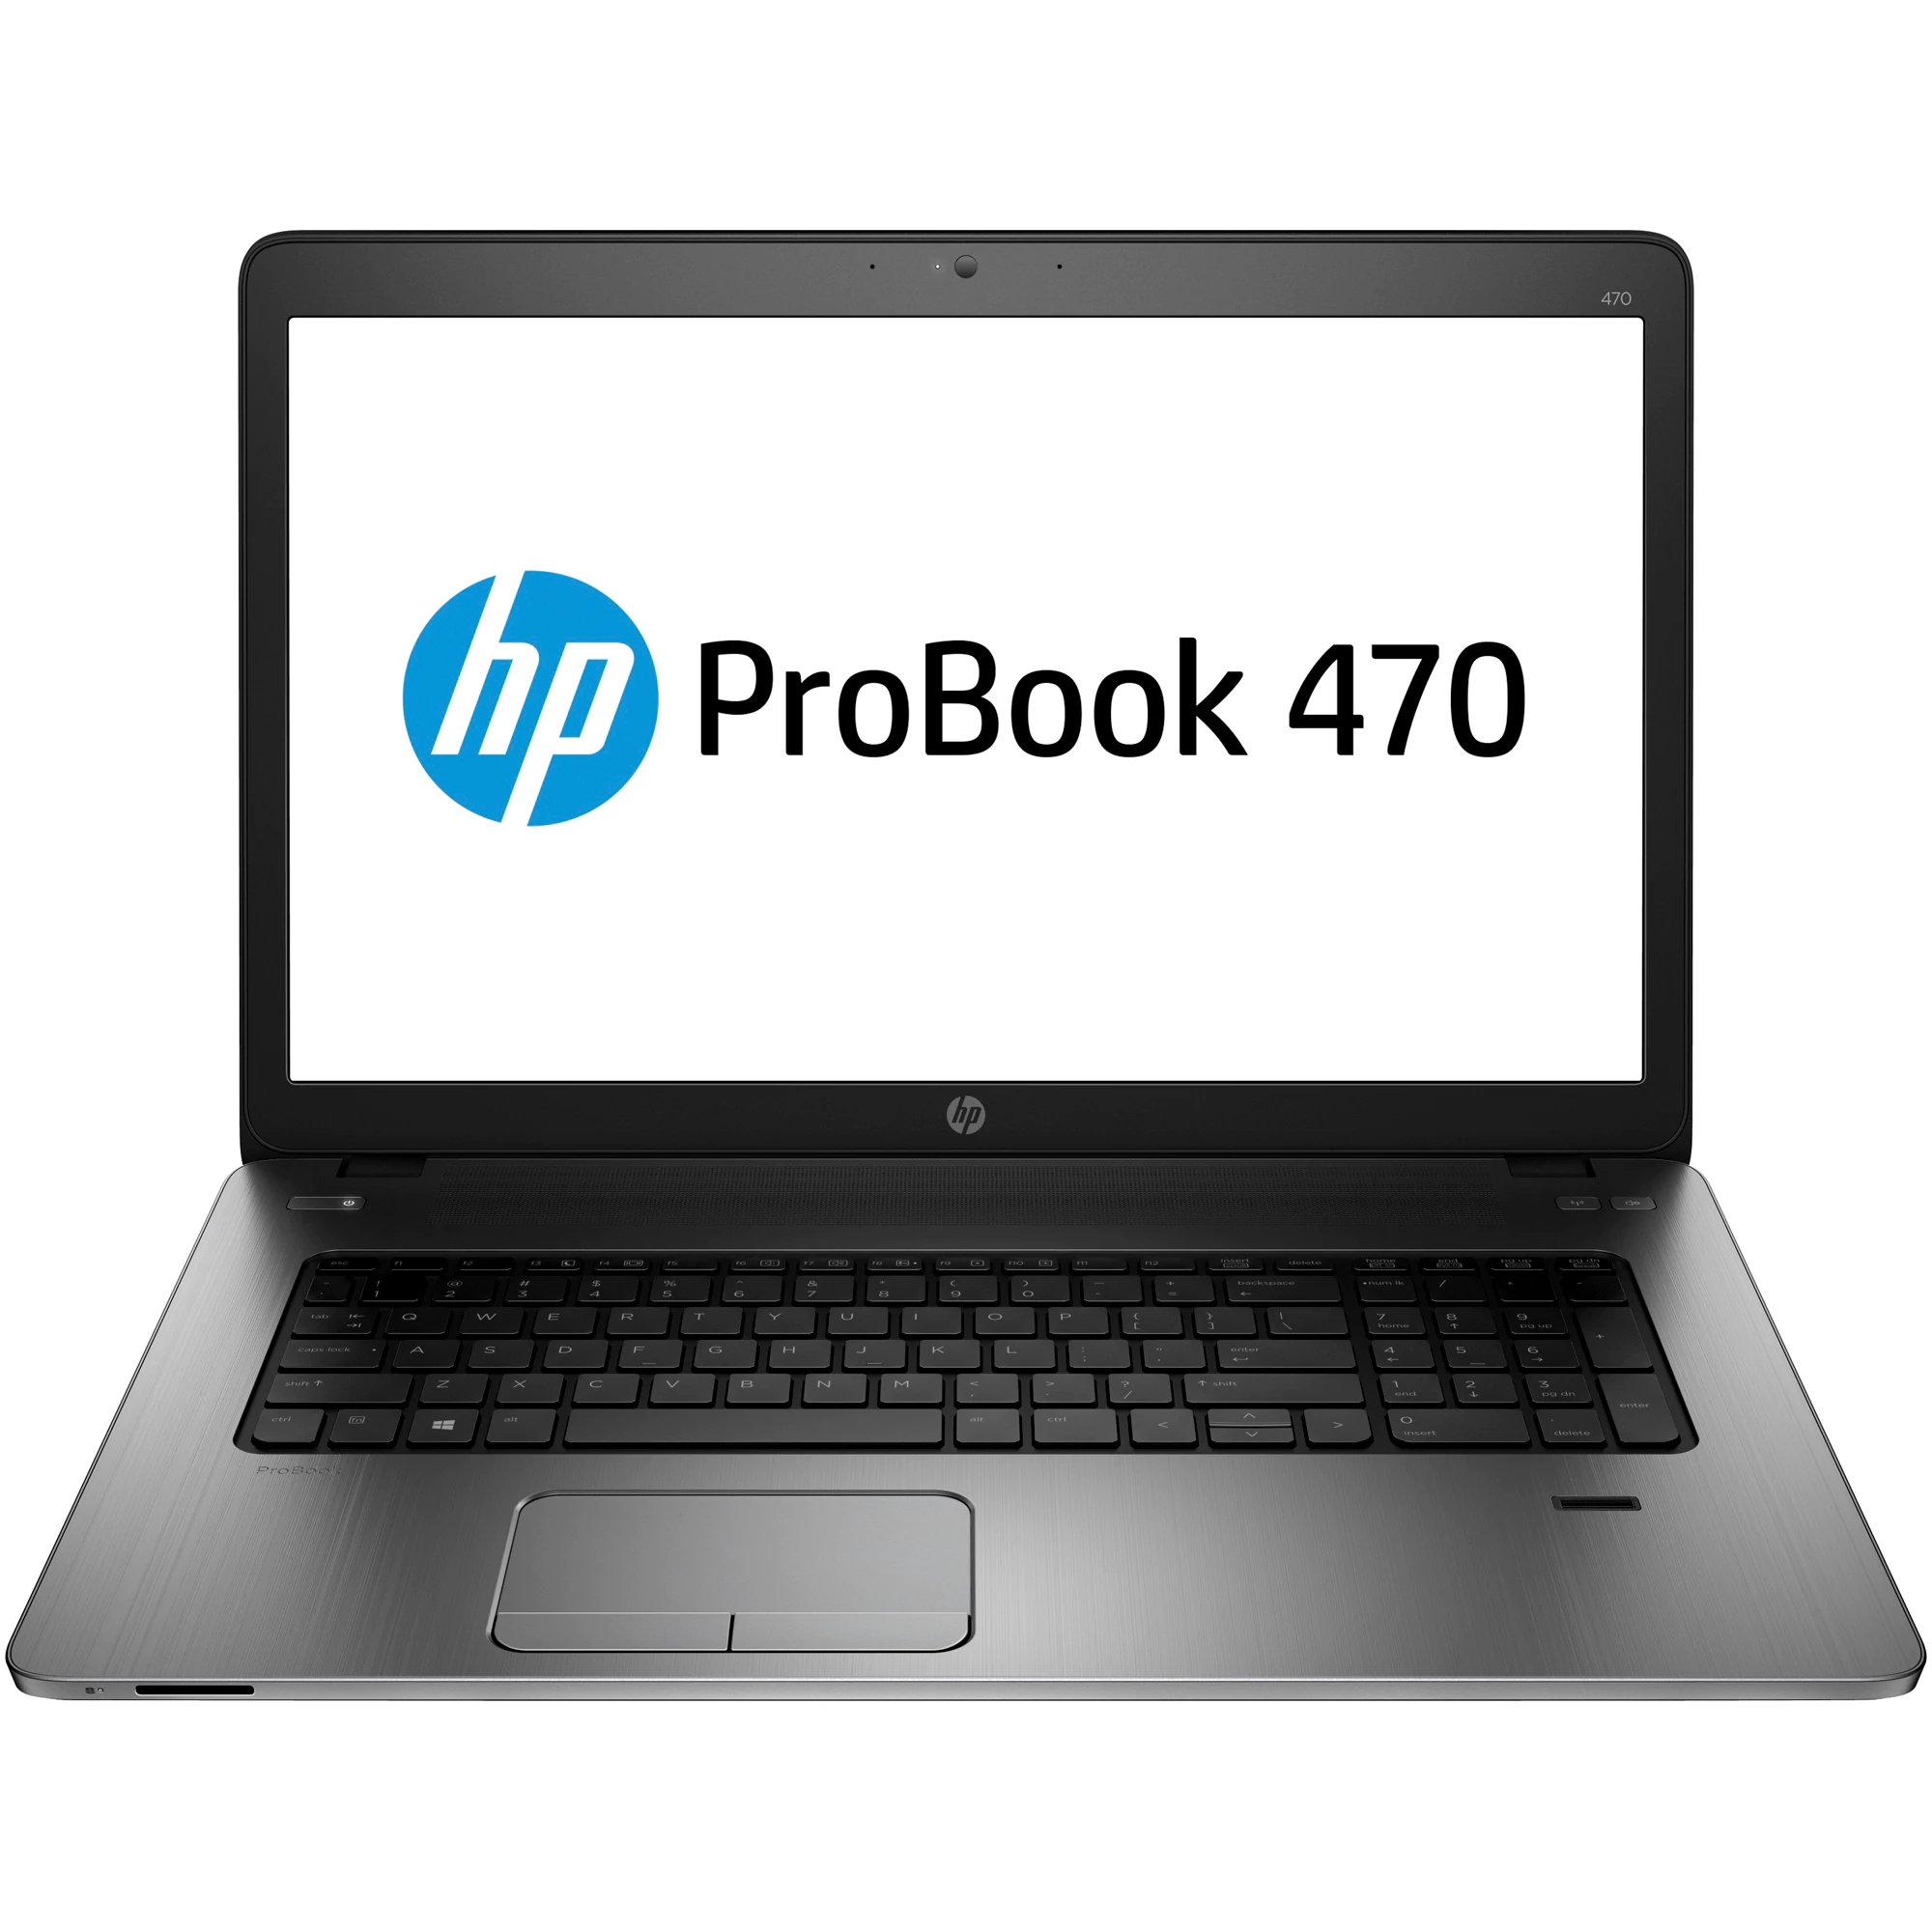 Laptop HP ProBook 470 G2, Intel Core i5-4210U 1.70GHz, 4GB DDR3, 120GB SSD, DVD-RW, 17.3 Inch, Webcam, Tastatura Numerica